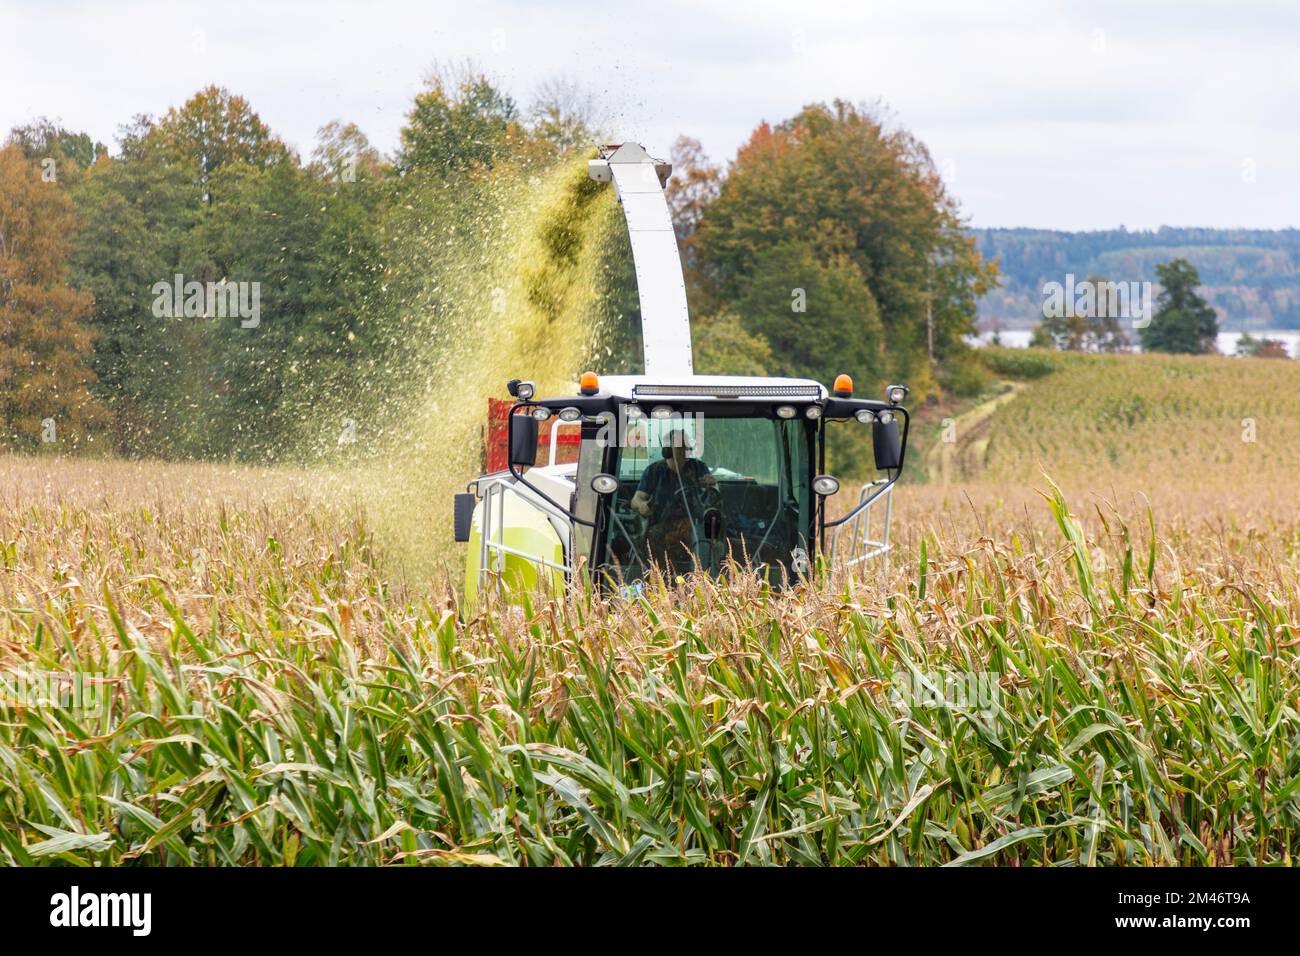 Combine harvester working in corn field Stock Photo